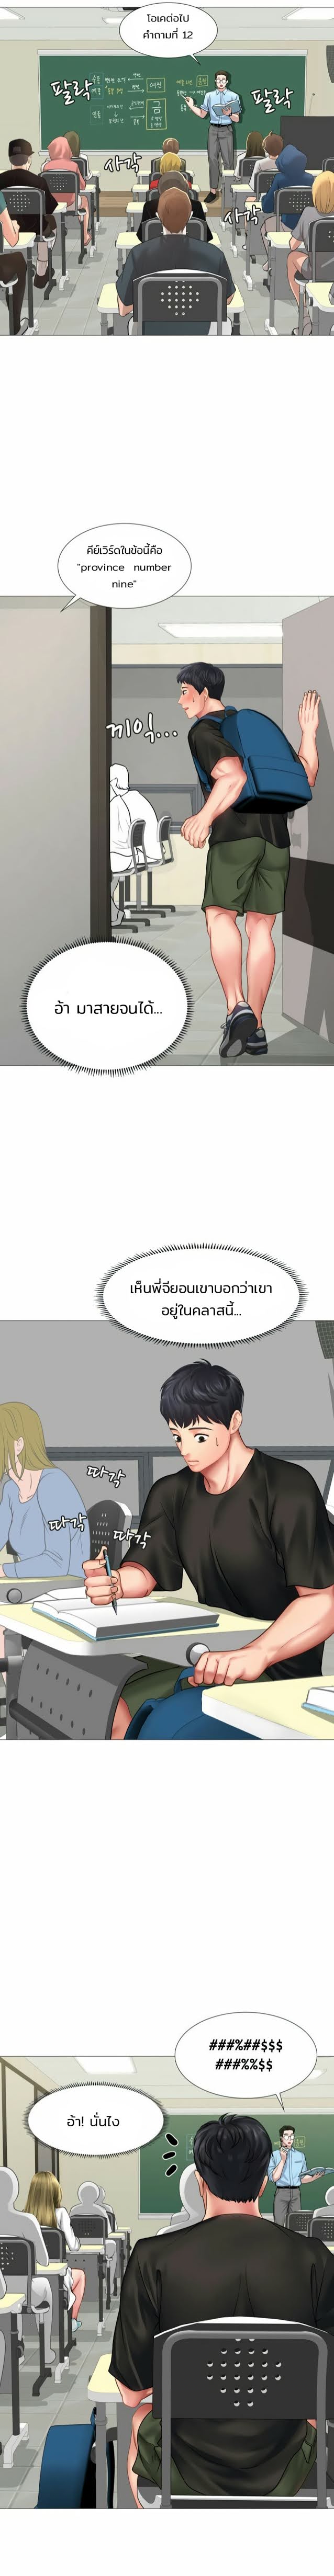 Should I Study at Noryangjin? - หน้า 10